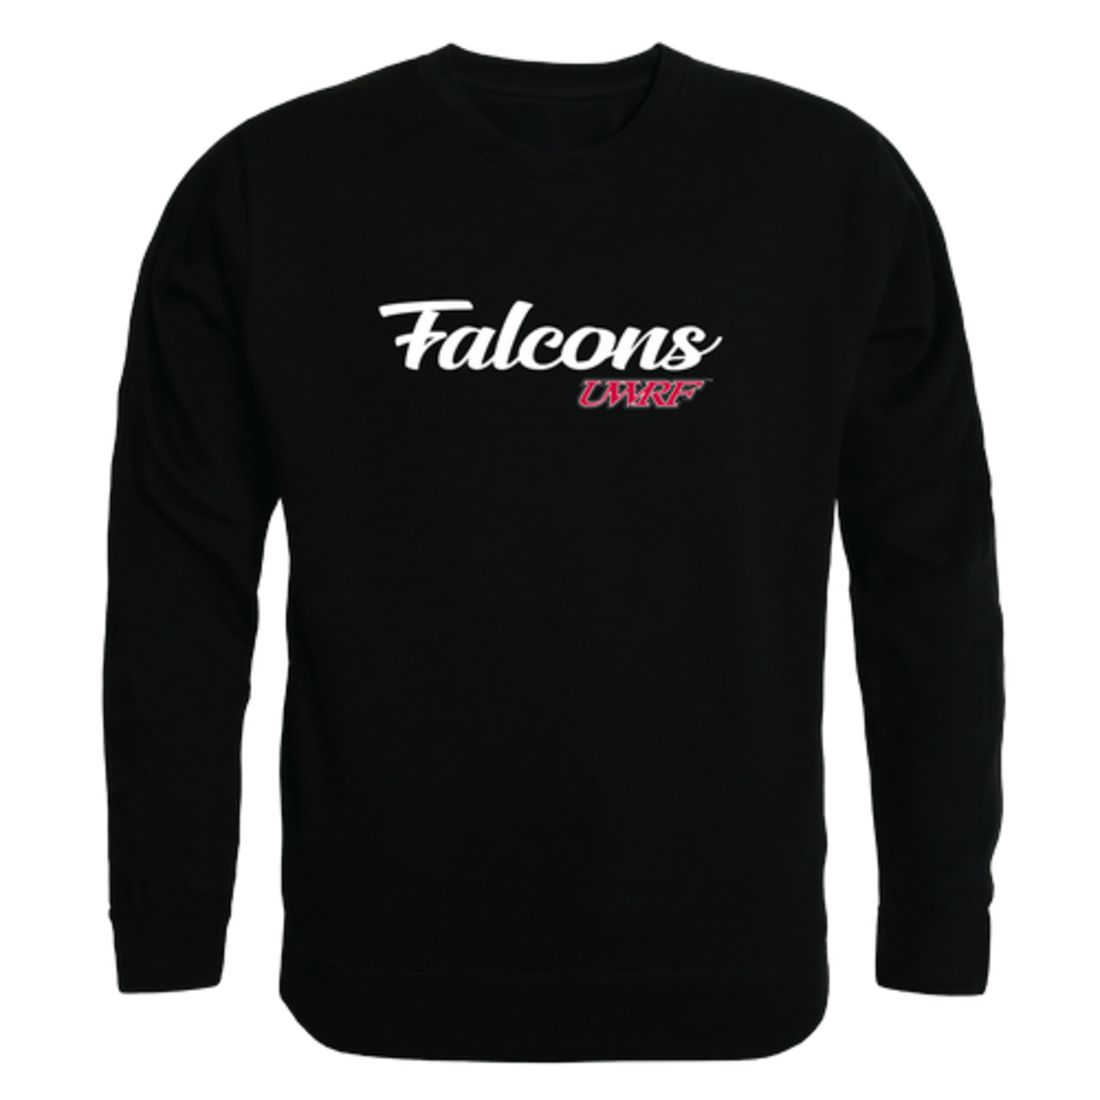 UWRF University of Wisconsin River Falls Falcons Script Crewneck Pullover Sweatshirt Sweater Black-Campus-Wardrobe